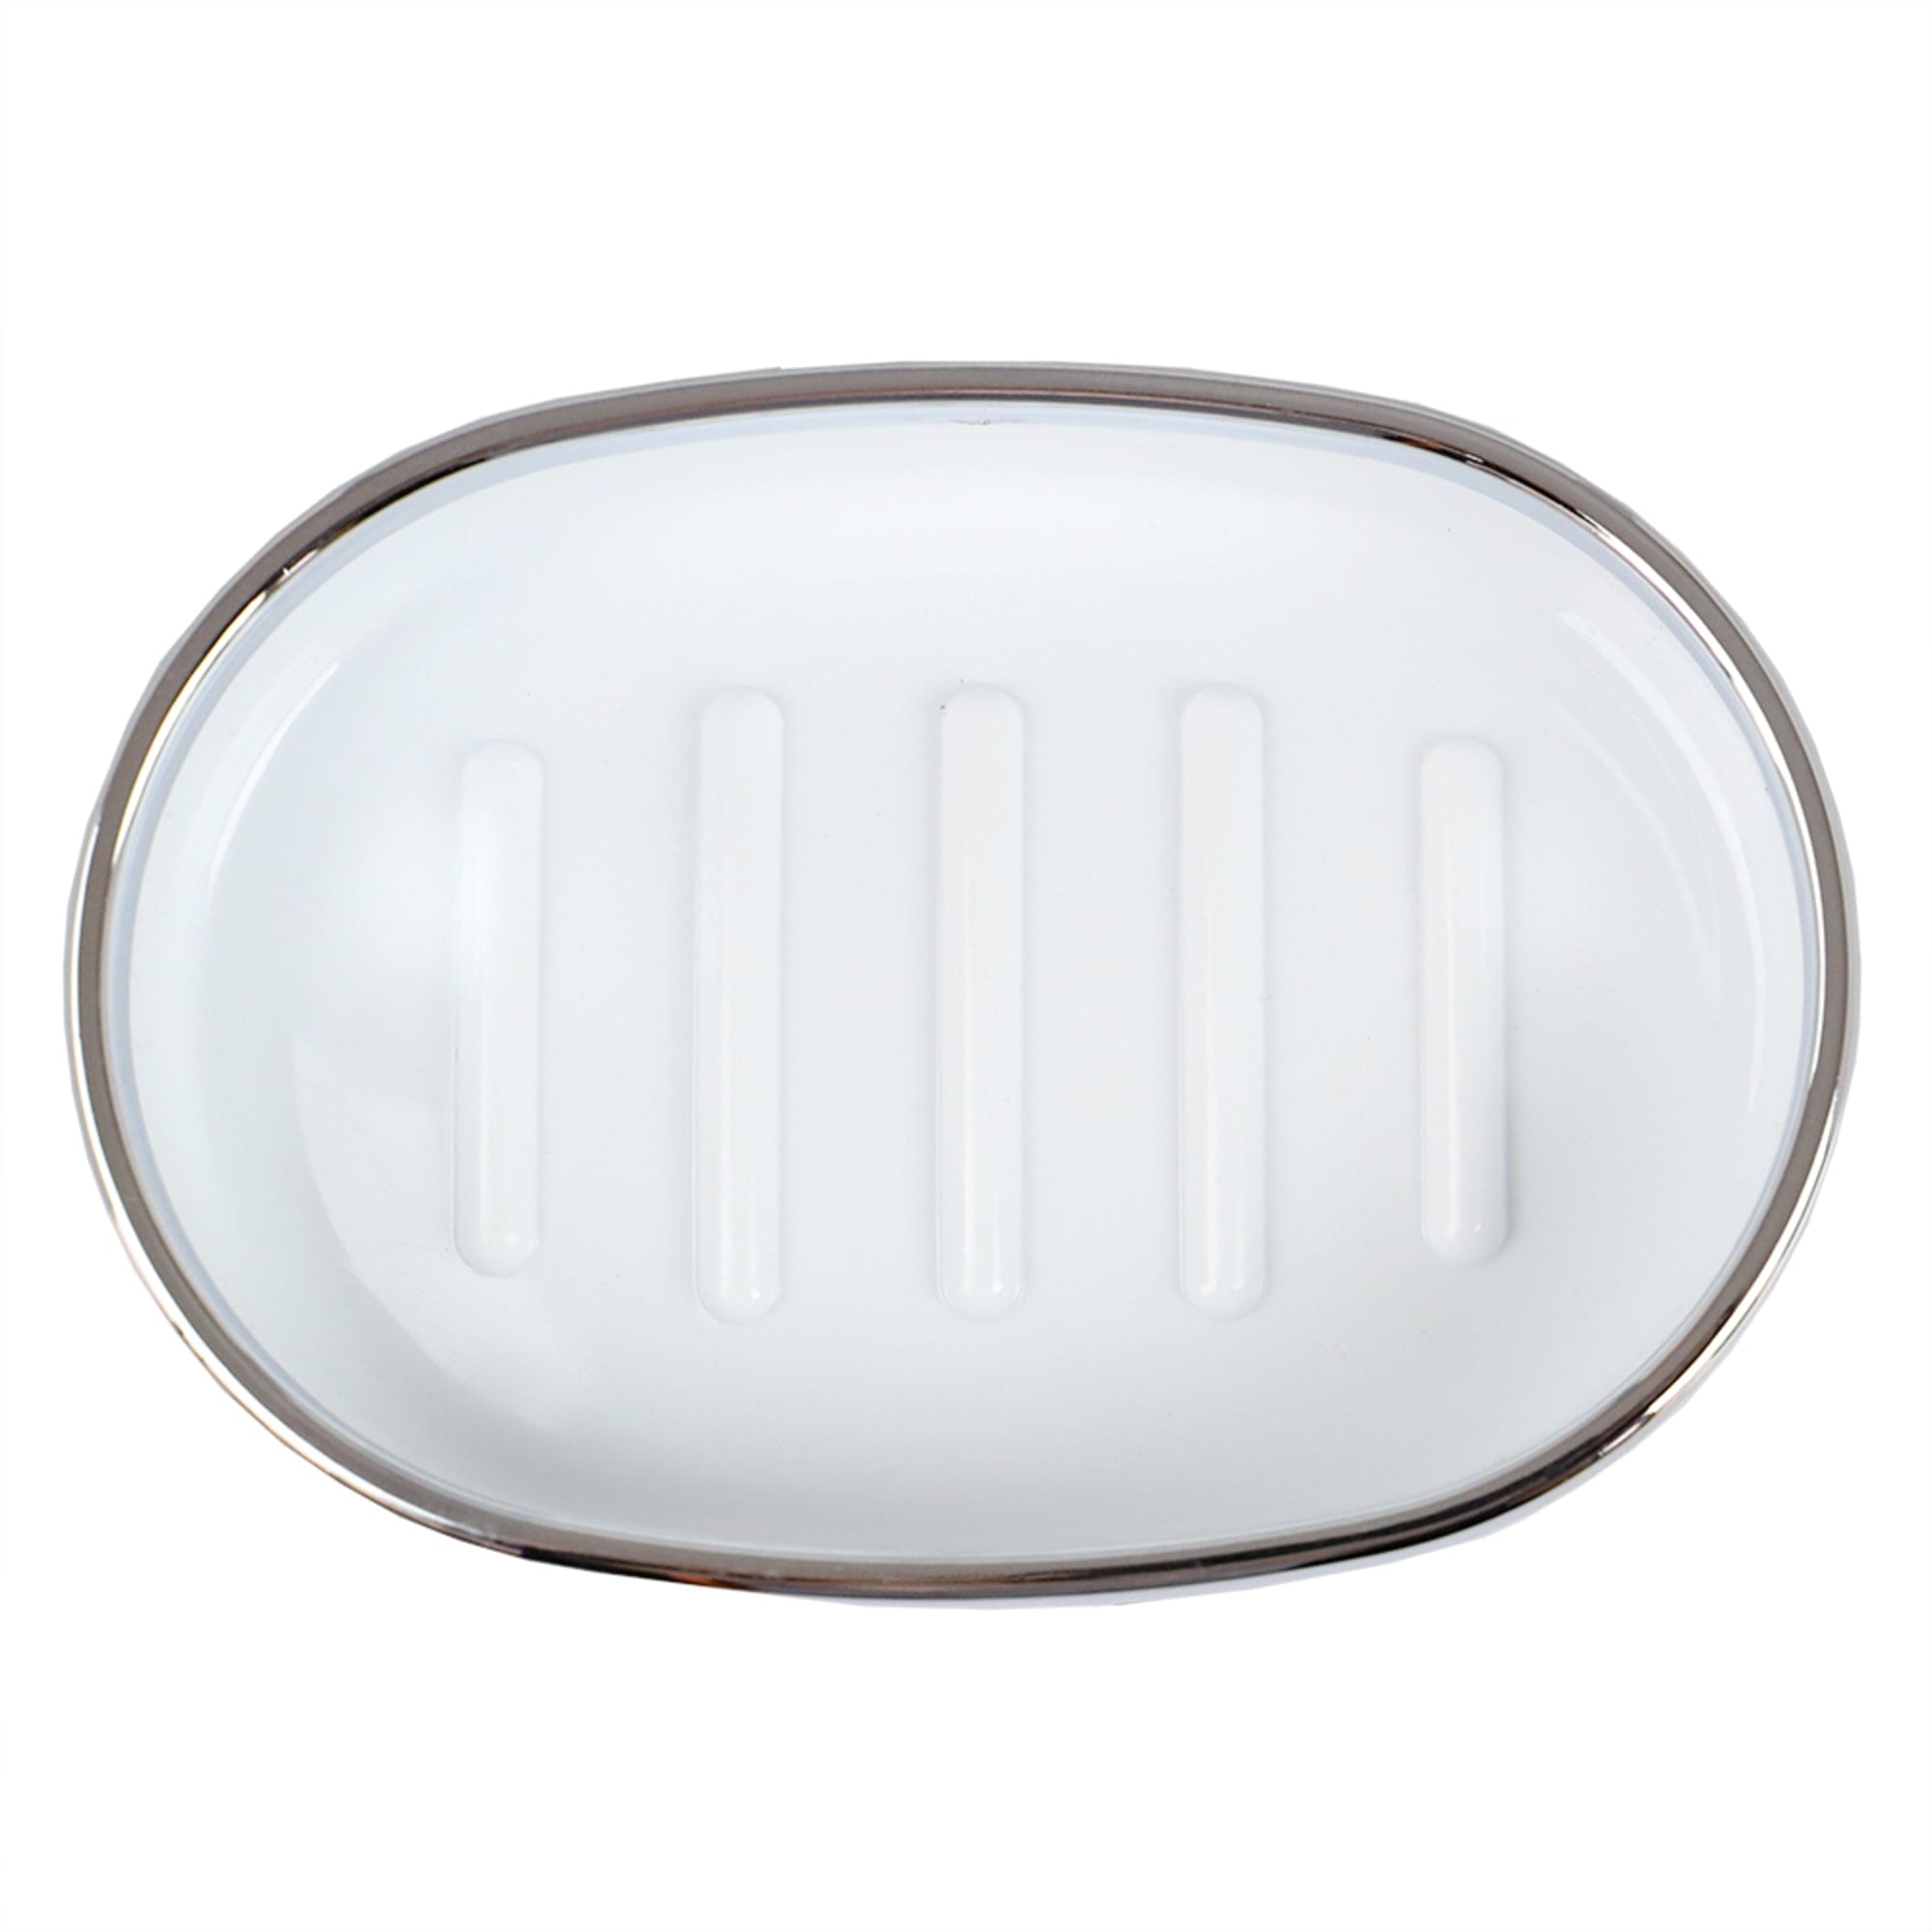 Home Basics Skylar Oval Ridged ABS Plastic Soap Dish, White $3.00 EACH, CASE PACK OF 12